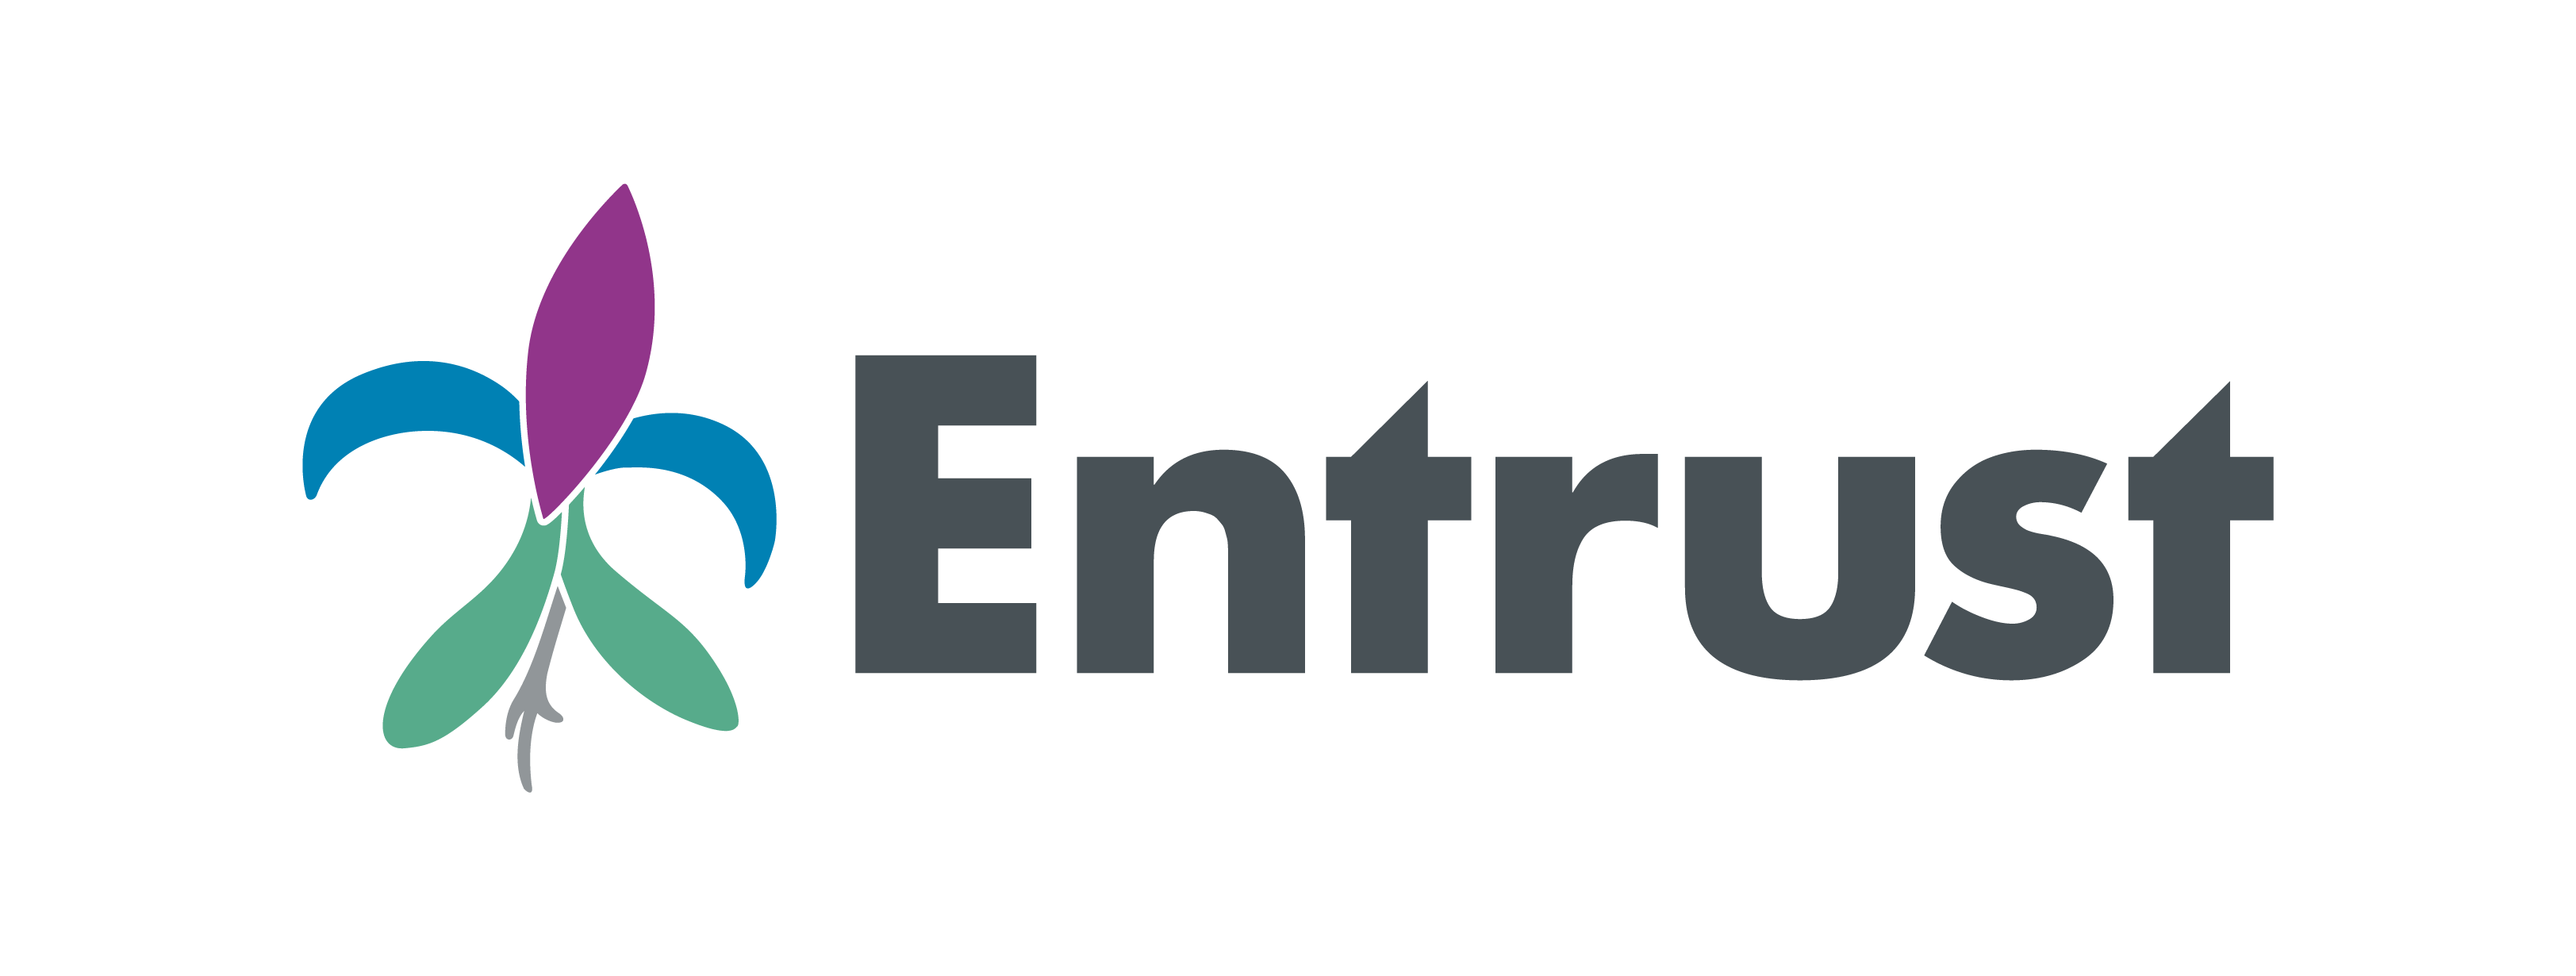 Logo de Entrust